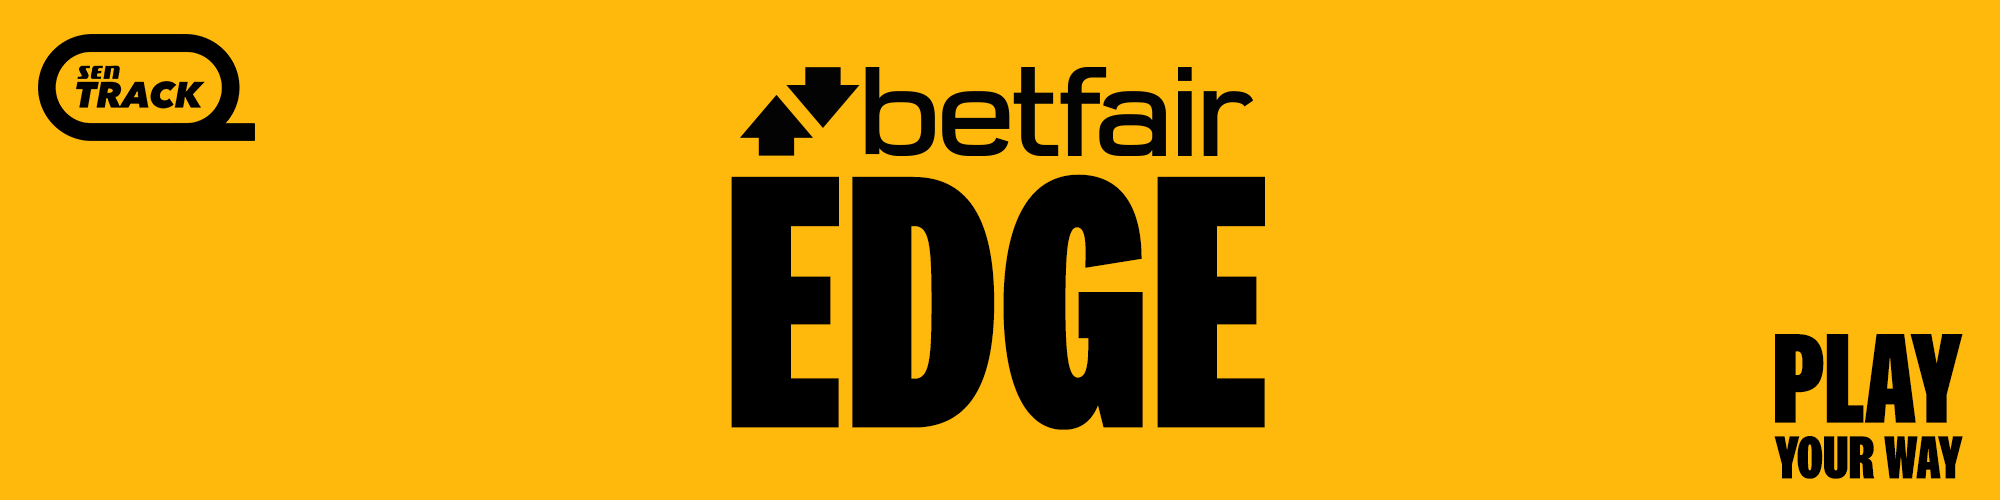 Betfair-Edge 2000x500-Twitter-Banner